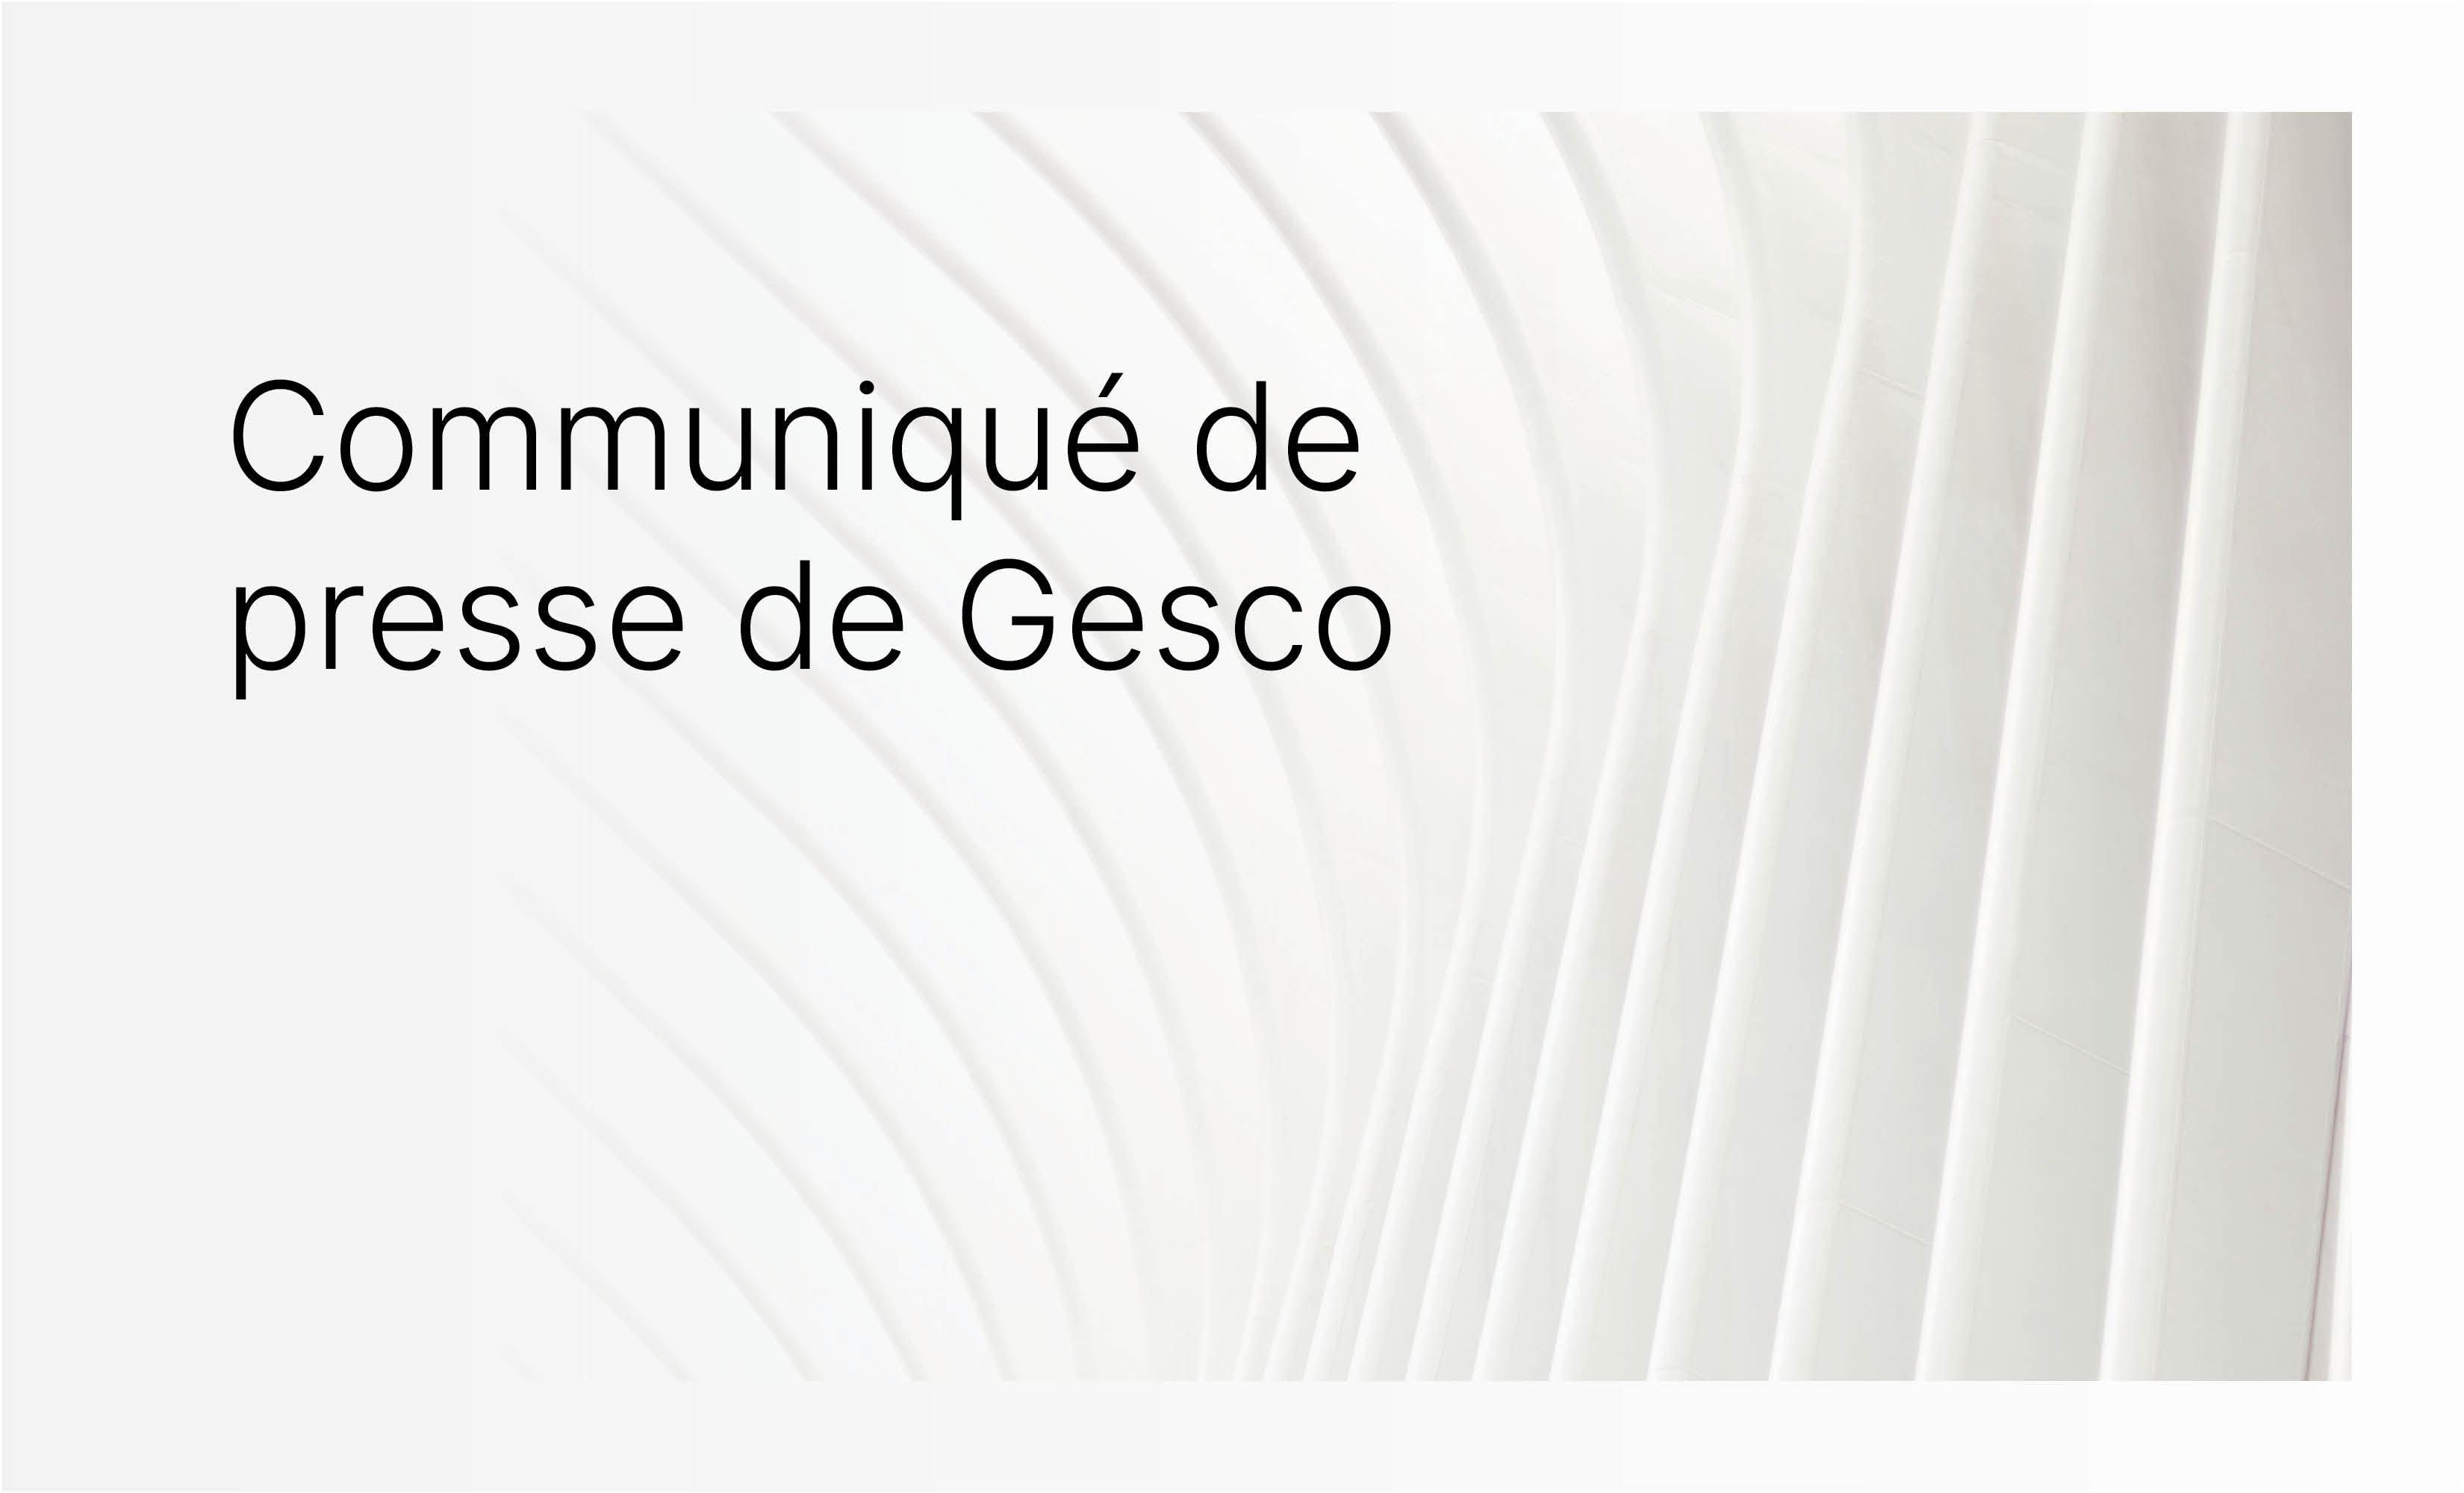 Communiqué de presse de Gesco - Resource